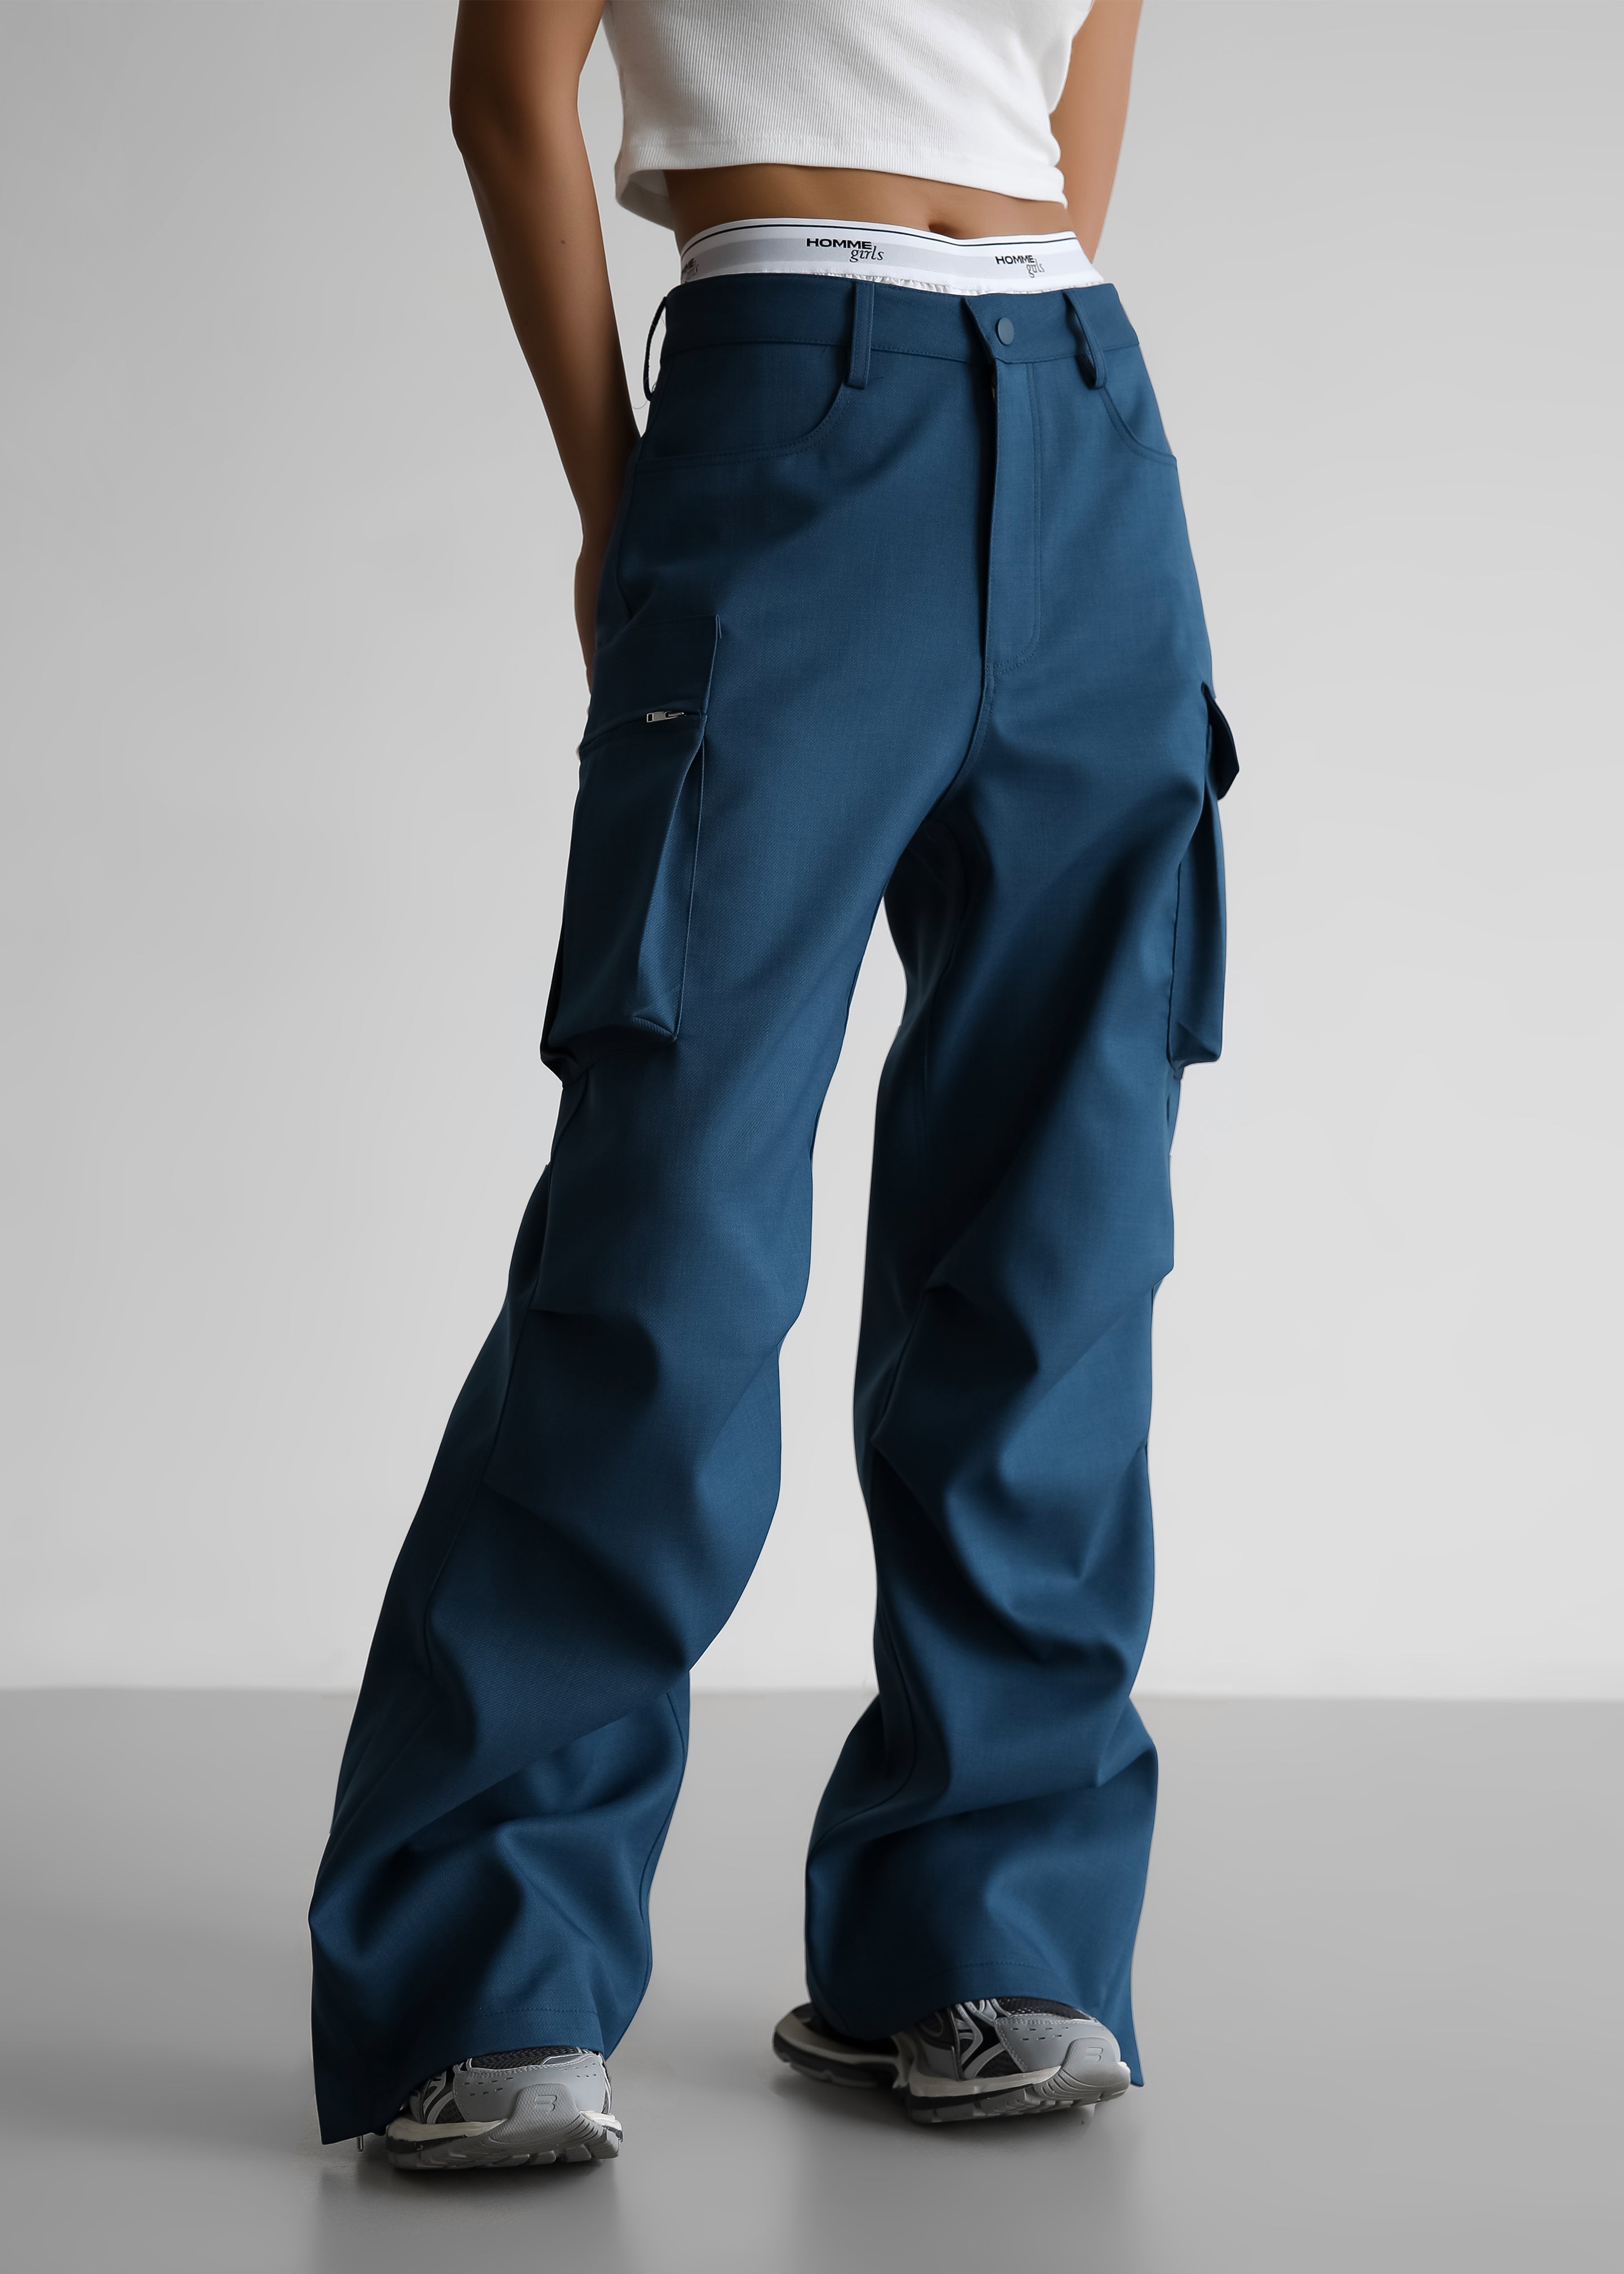 Navy Cargo Pants Womens, Shop Online